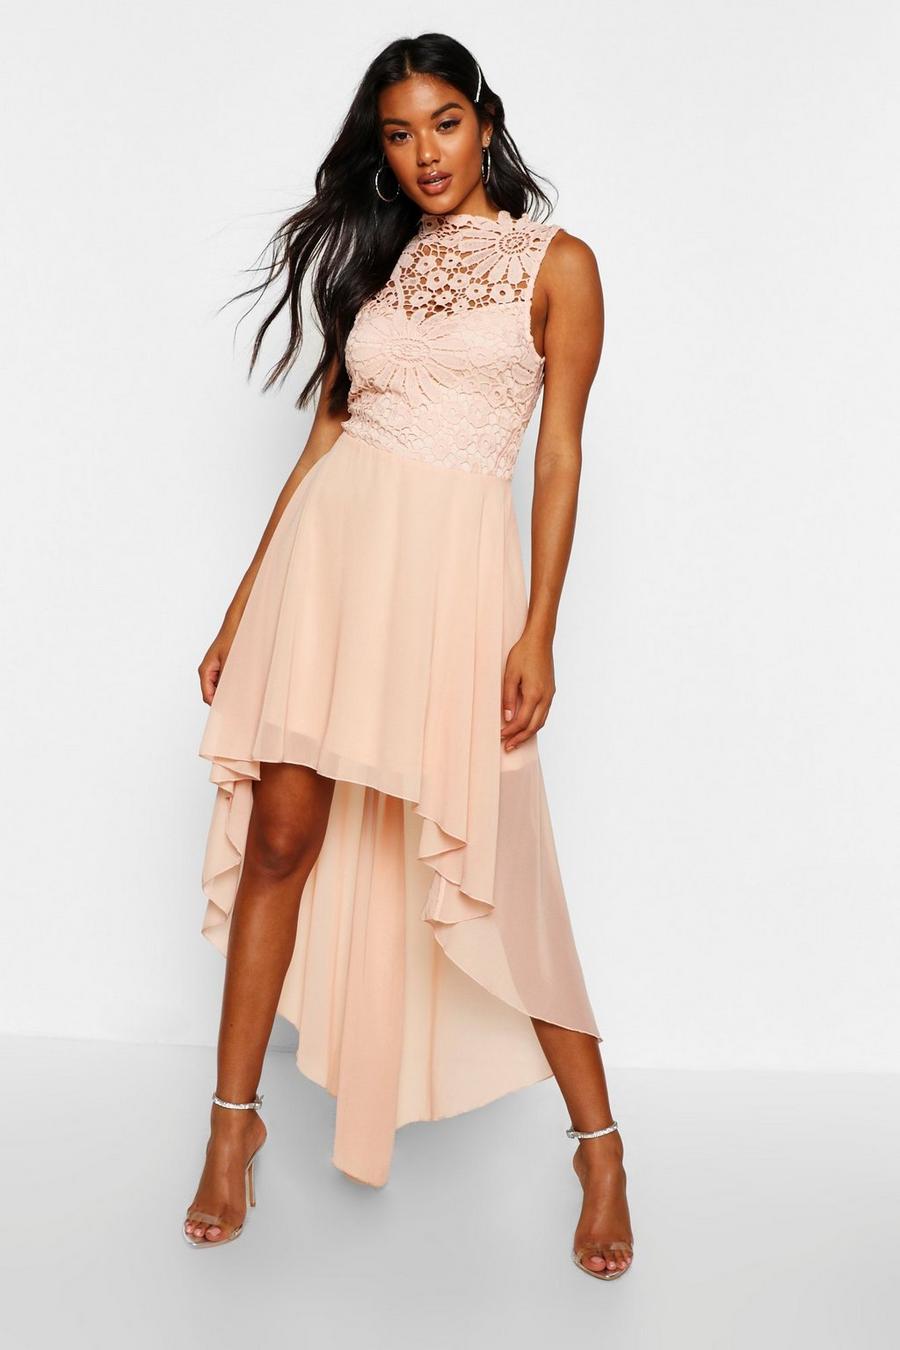 Blush pink Boutique Lace Chiffon Dip Hem Bridesmaid Dress